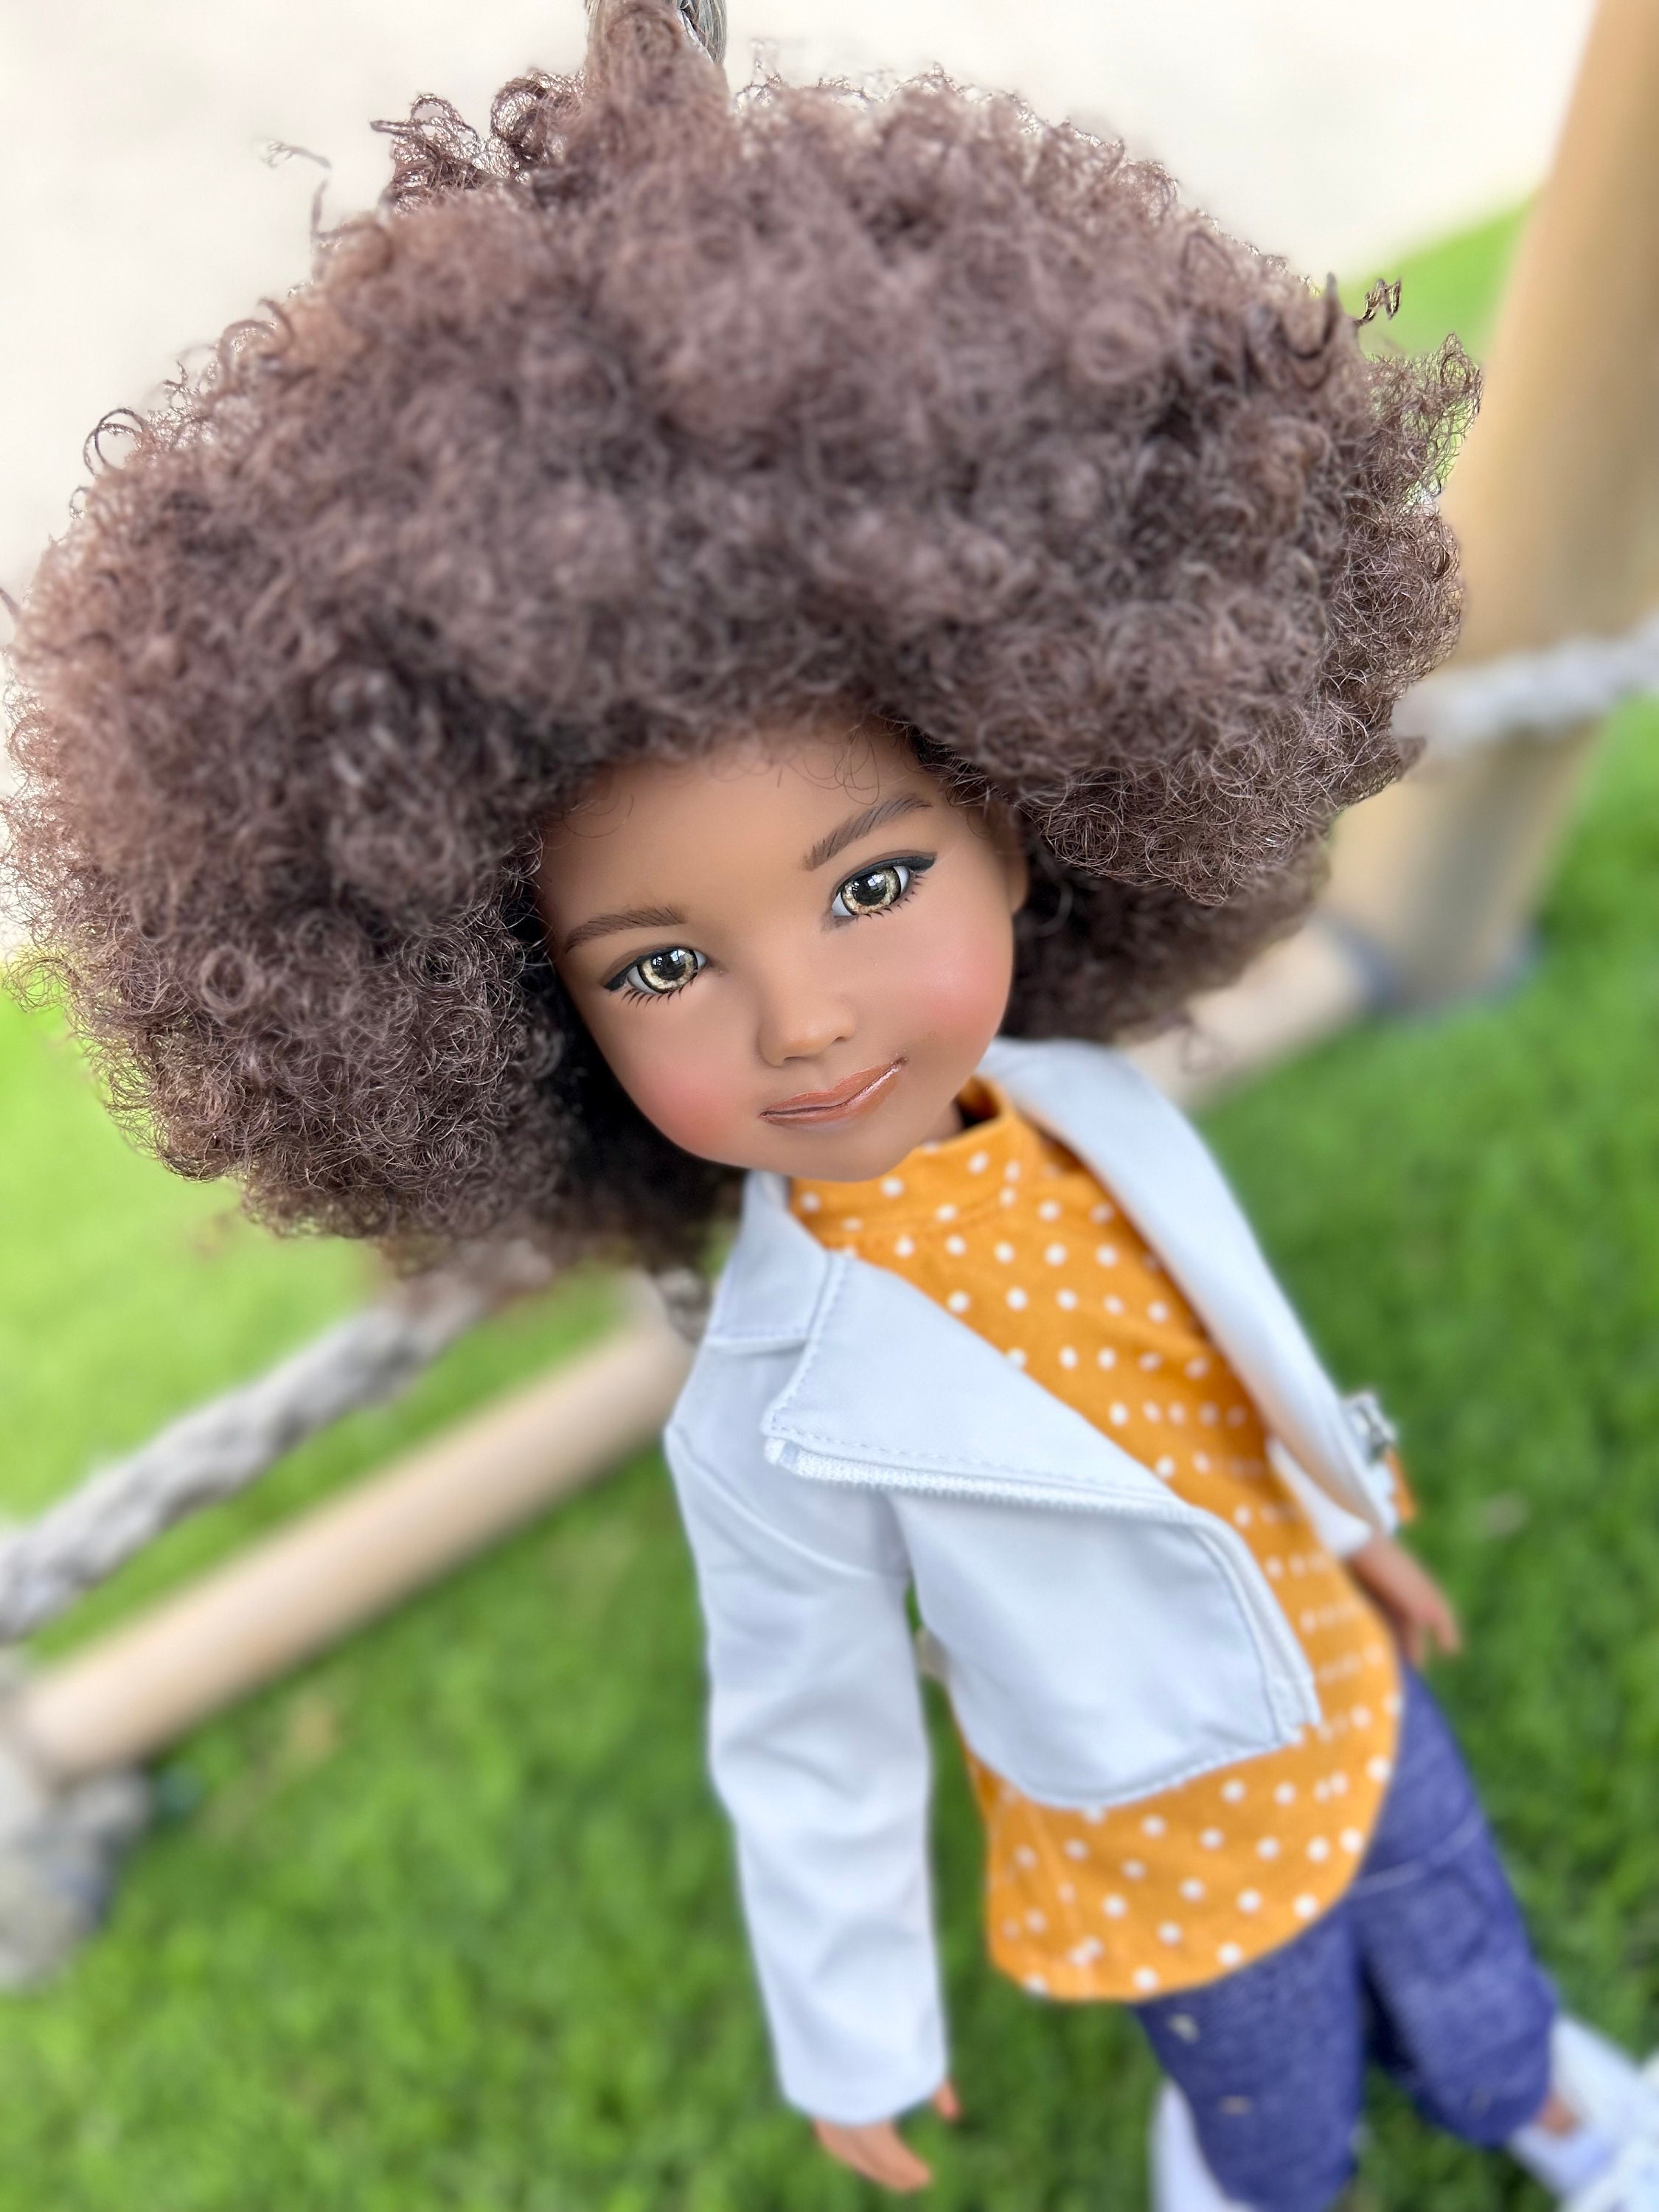 Custom doll wig for 18 American Girl Dolls - Heat Safe -Tangle Resistant -  fits 11 head size of 18 dolls OG BJD Gotz Redhead PREorder